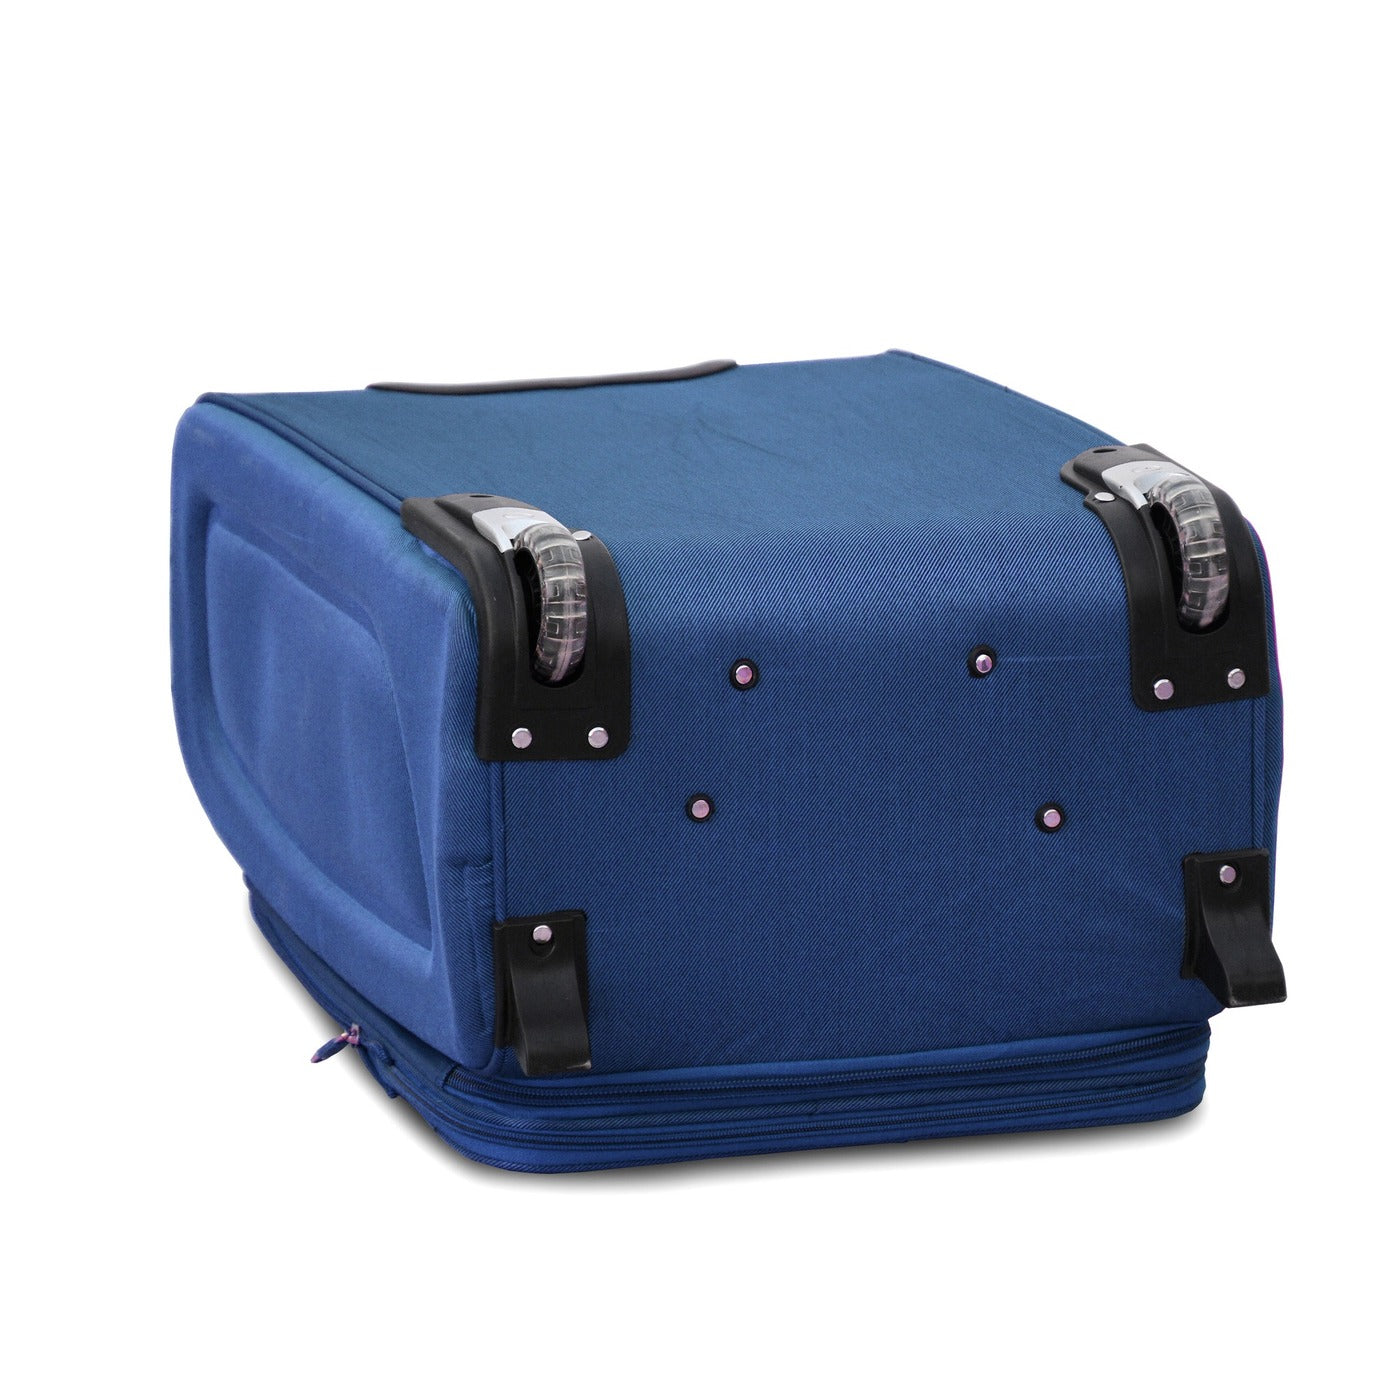 28" Blue Colour SJ JIAN 2 Wheel Luggage Lightweight Soft Material Trolley Bag